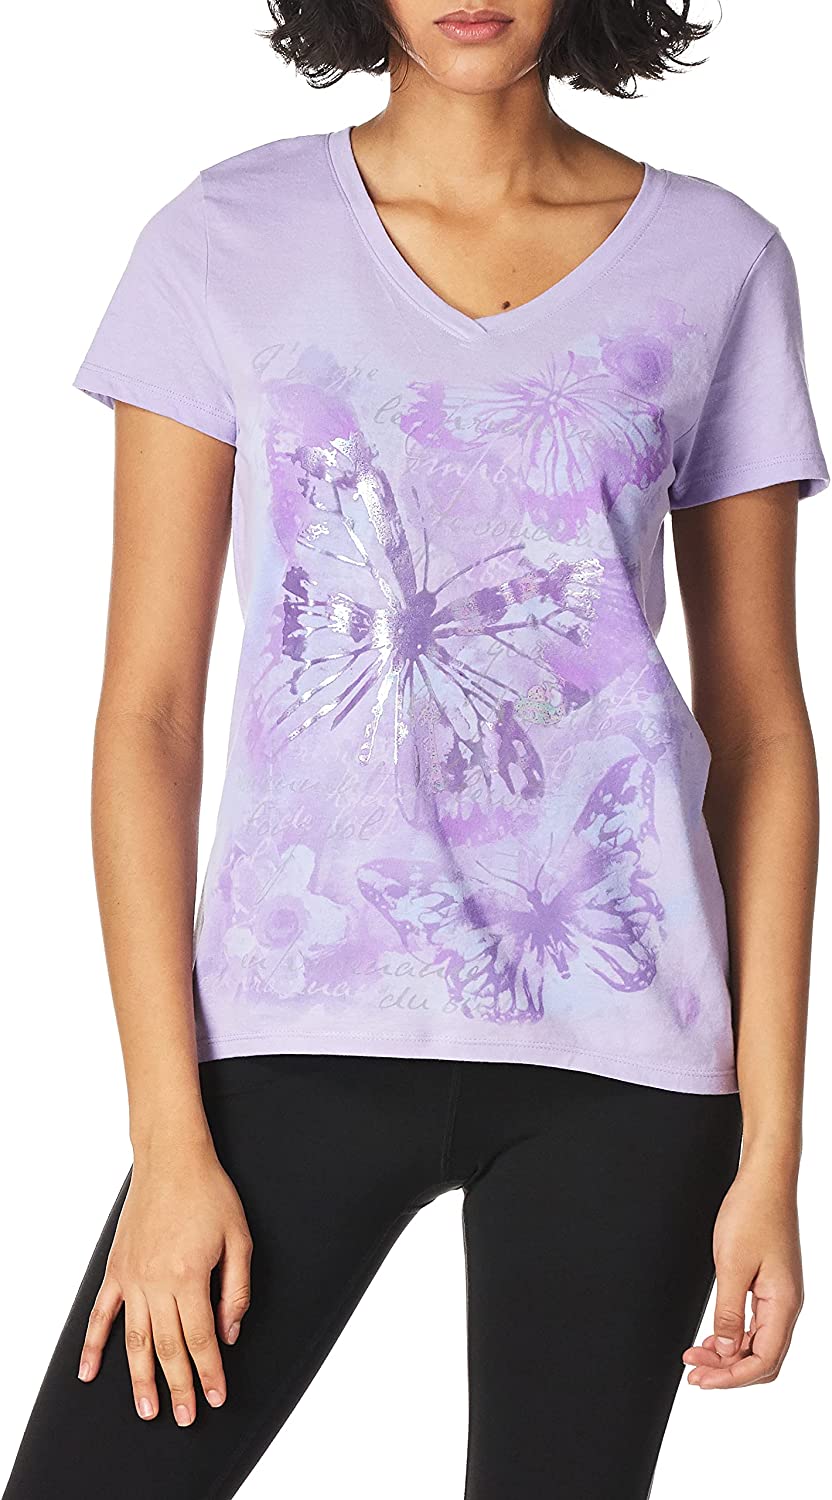 Hanes Women's V Neck T Shirt Pattern Elephant Short Sleeve Graphic Tee Navy Blue 